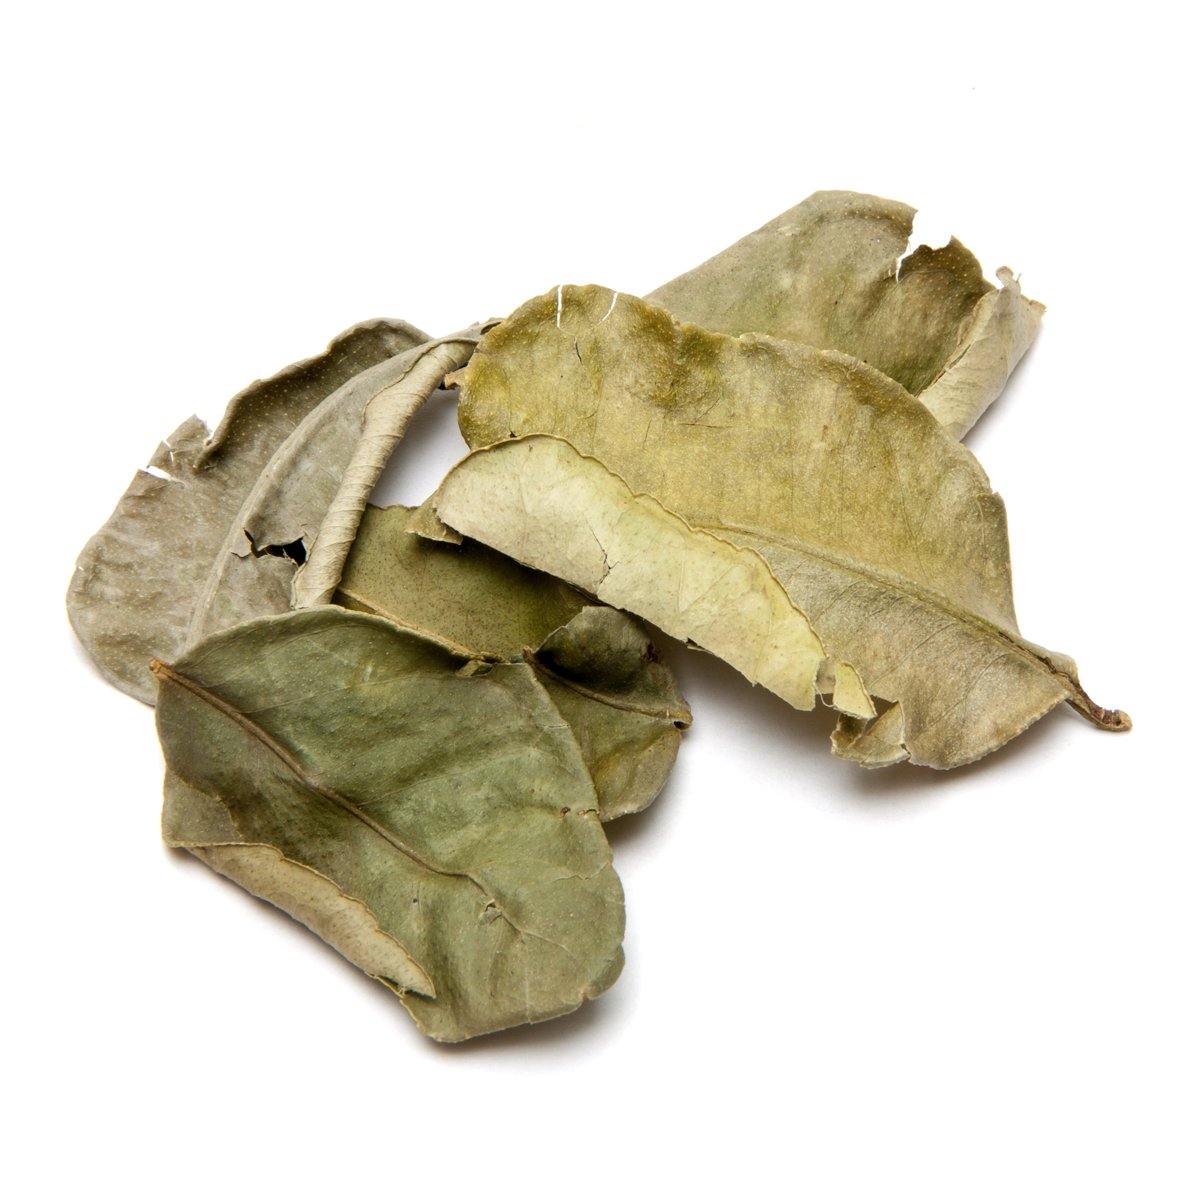 Kaffir Lime Leaves, Dried